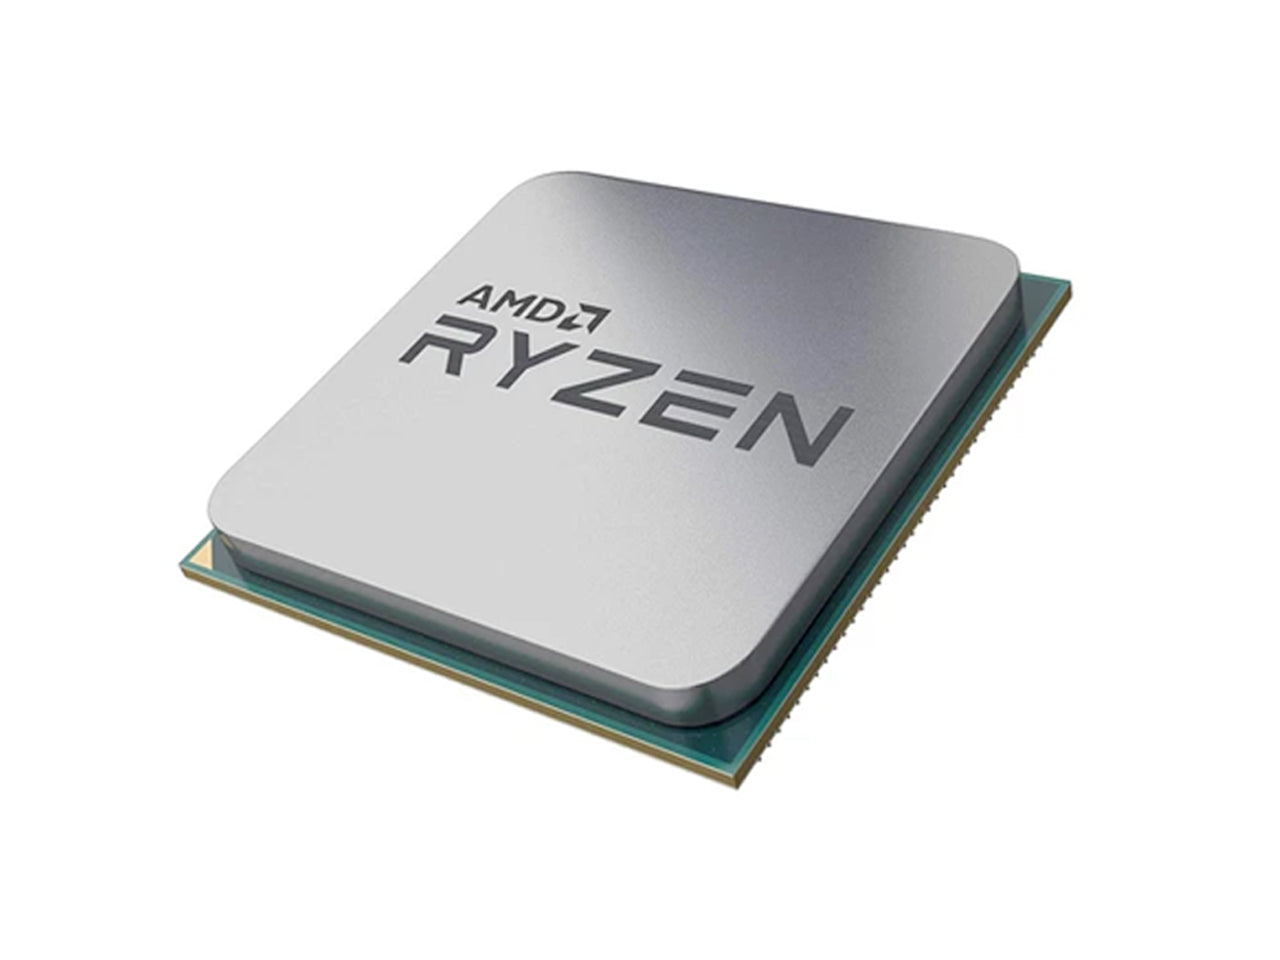 AMD Ryzen 9 3950X AM4 Desktop Processor